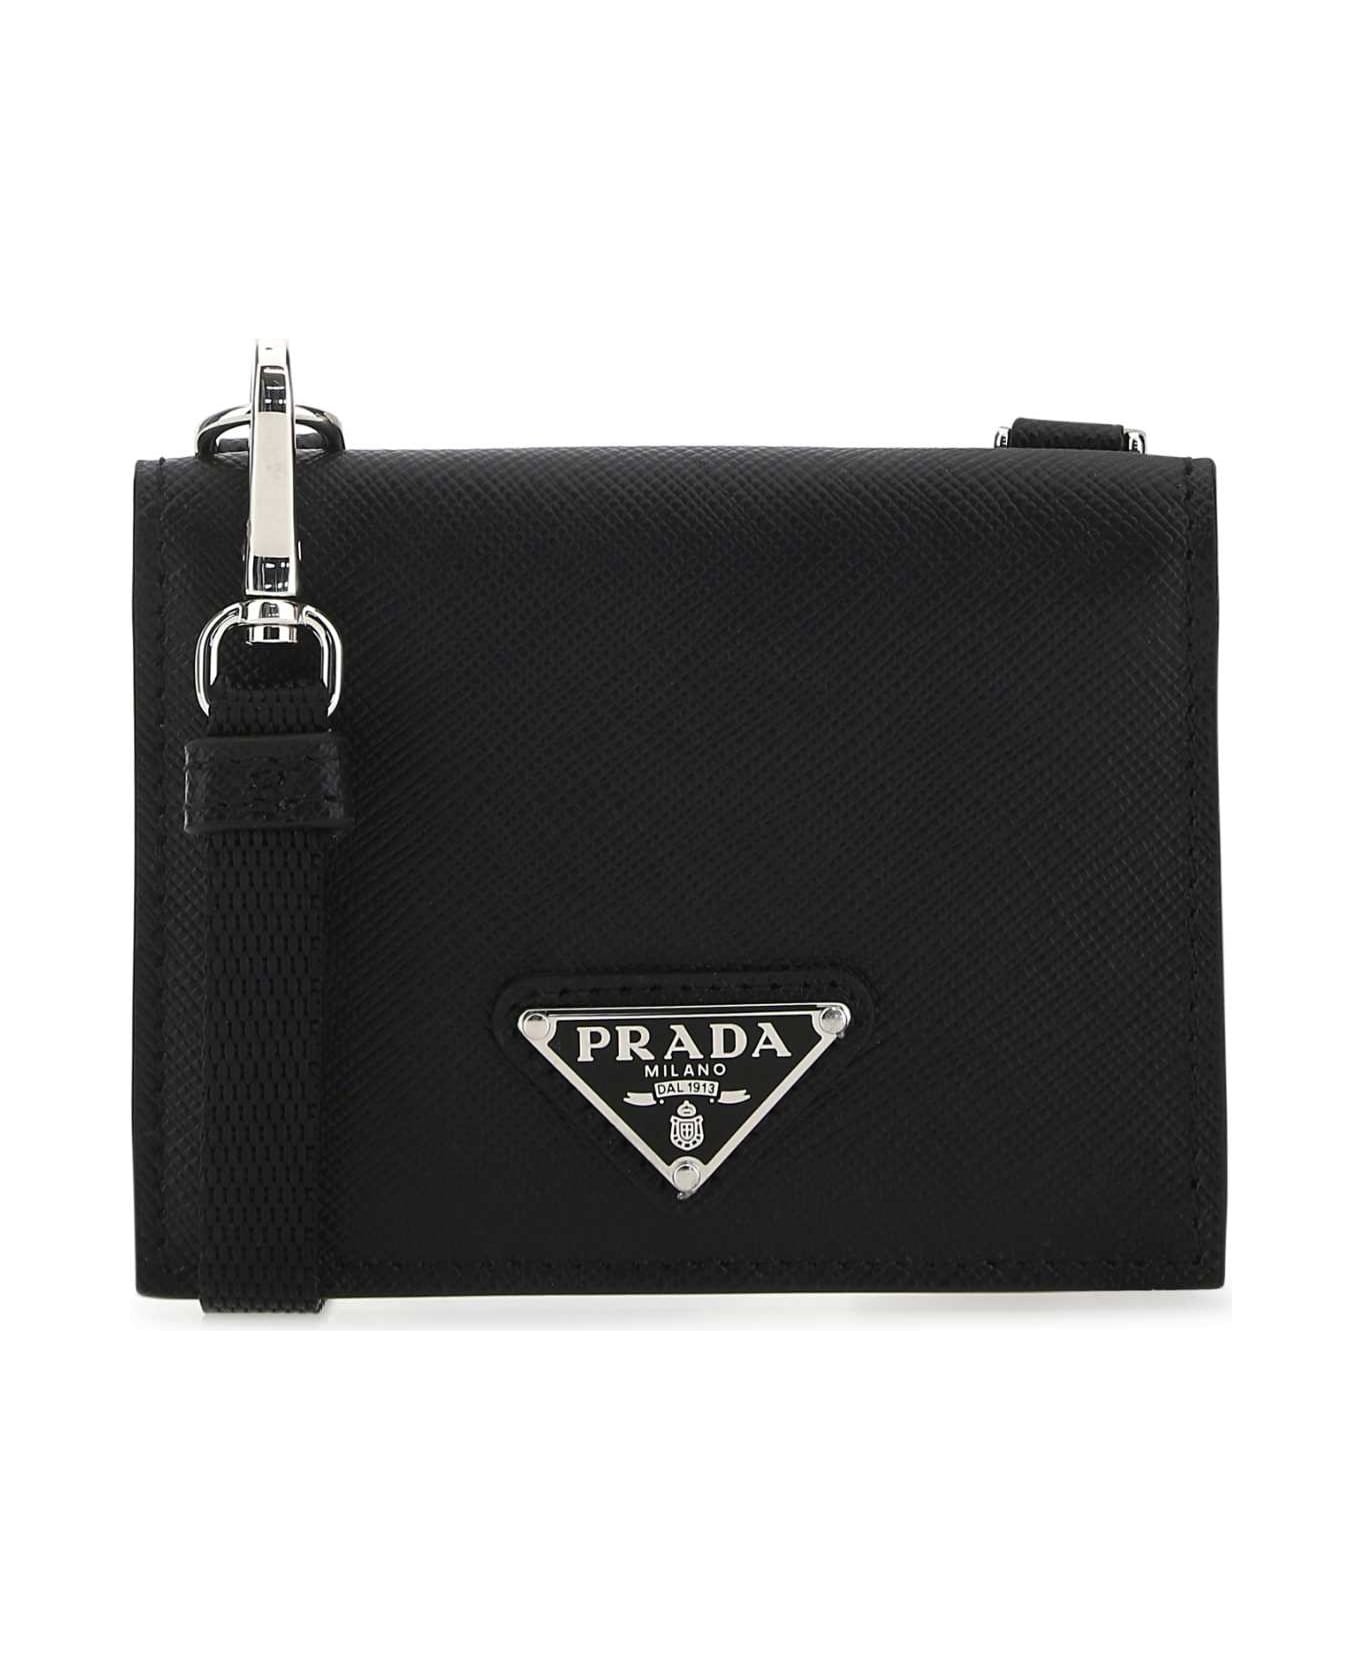 Prada Black Leather Cardholder - F0002